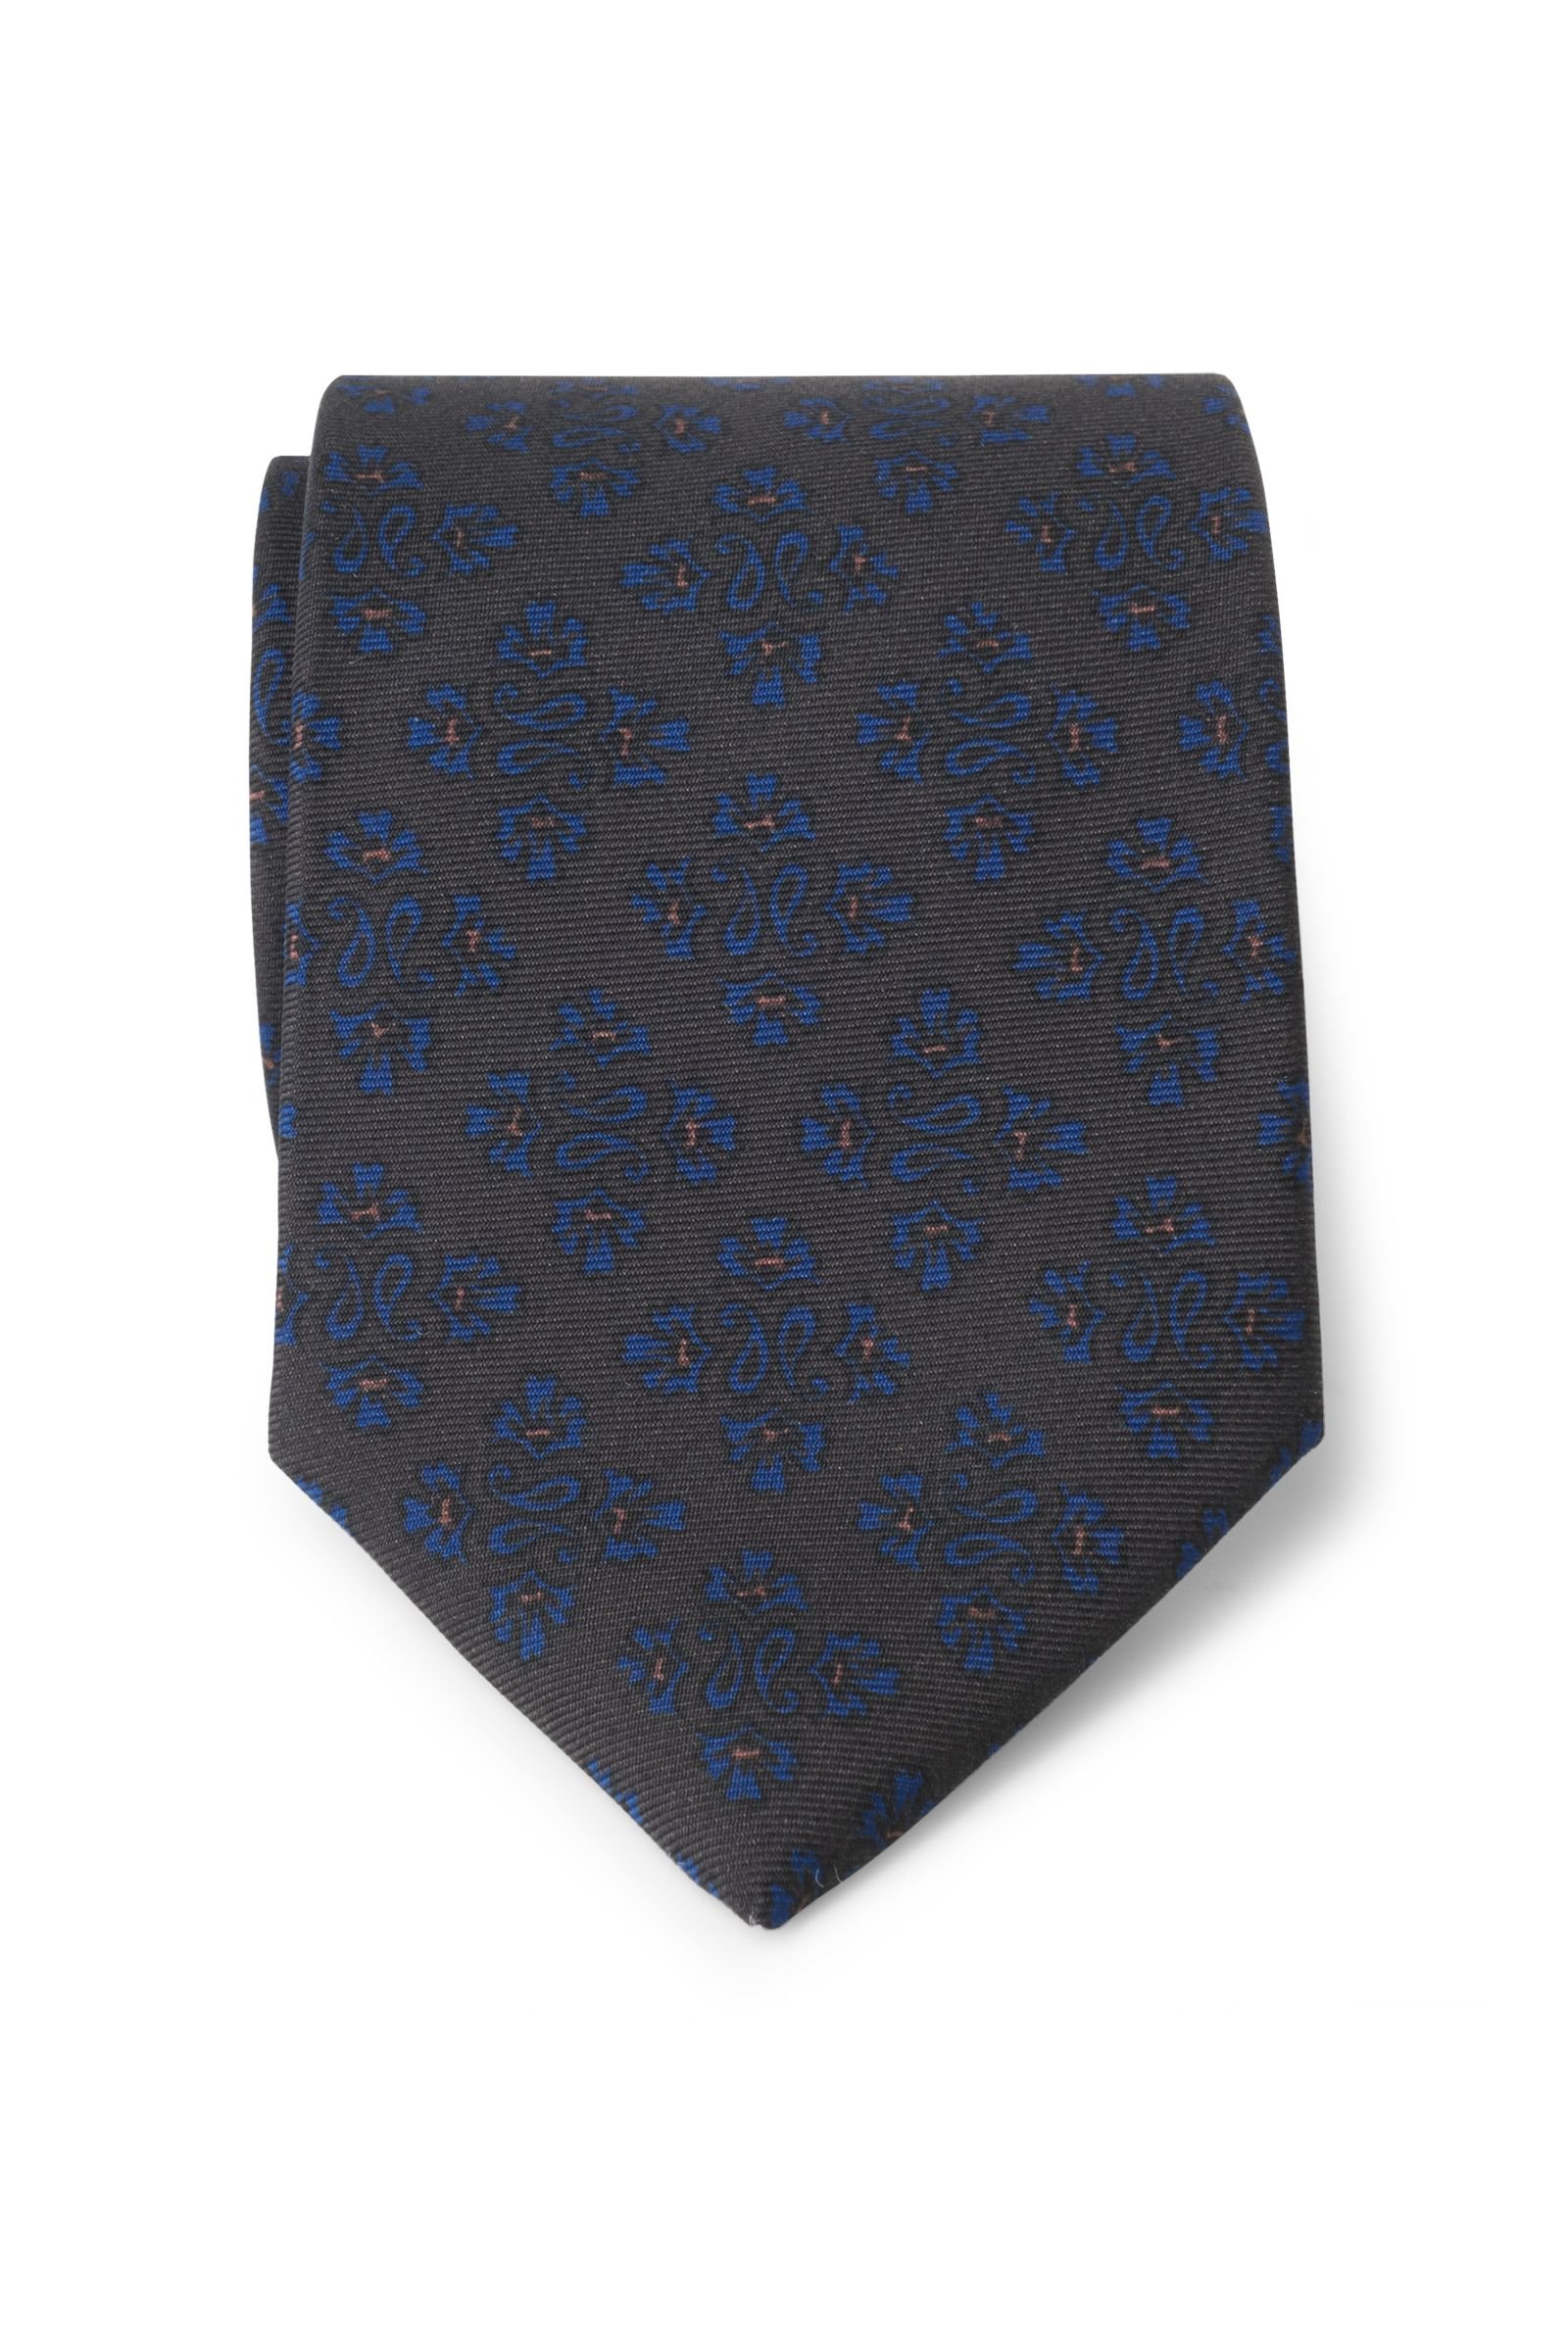 Silk tie dark olive/blue patterned